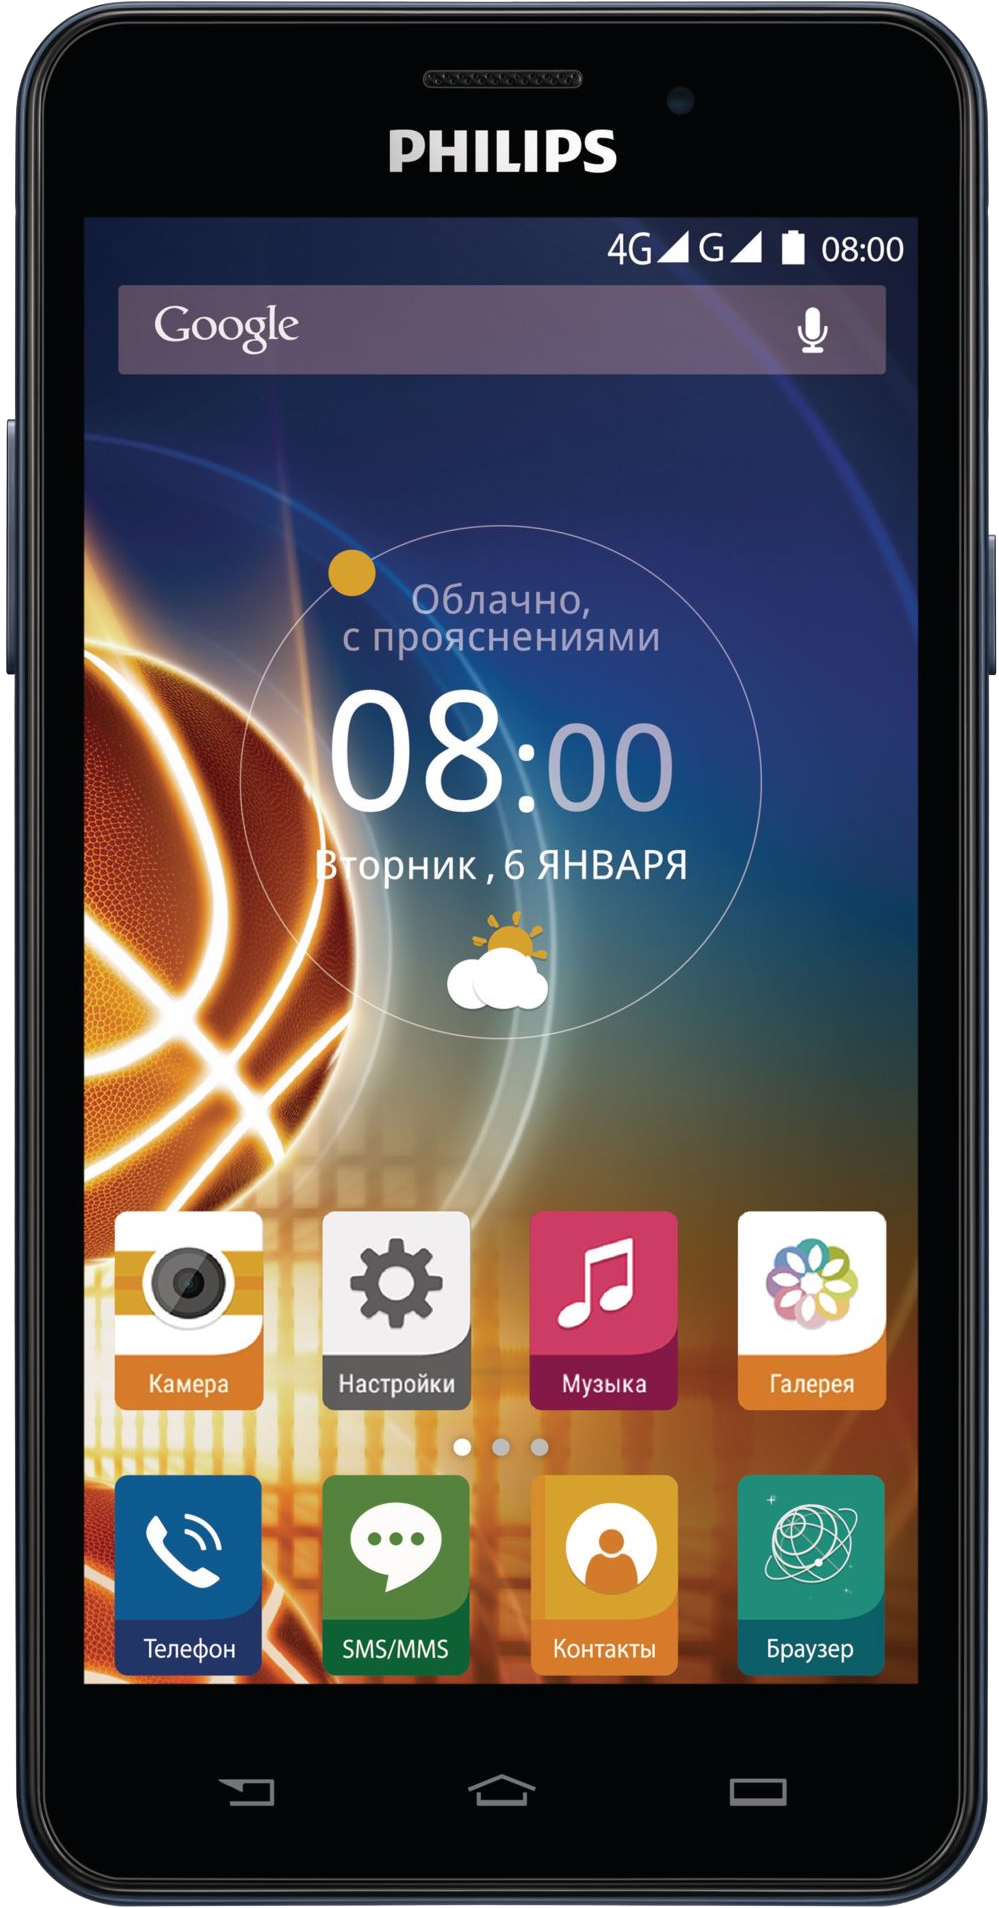 Philips 4g. Смартфон Philips Xenium v526 LTE. Philips Xenium смартфон сенсорный. Сенсорный телефон Филипс Xenium v526. Philips Xenium Android 2 SIM.